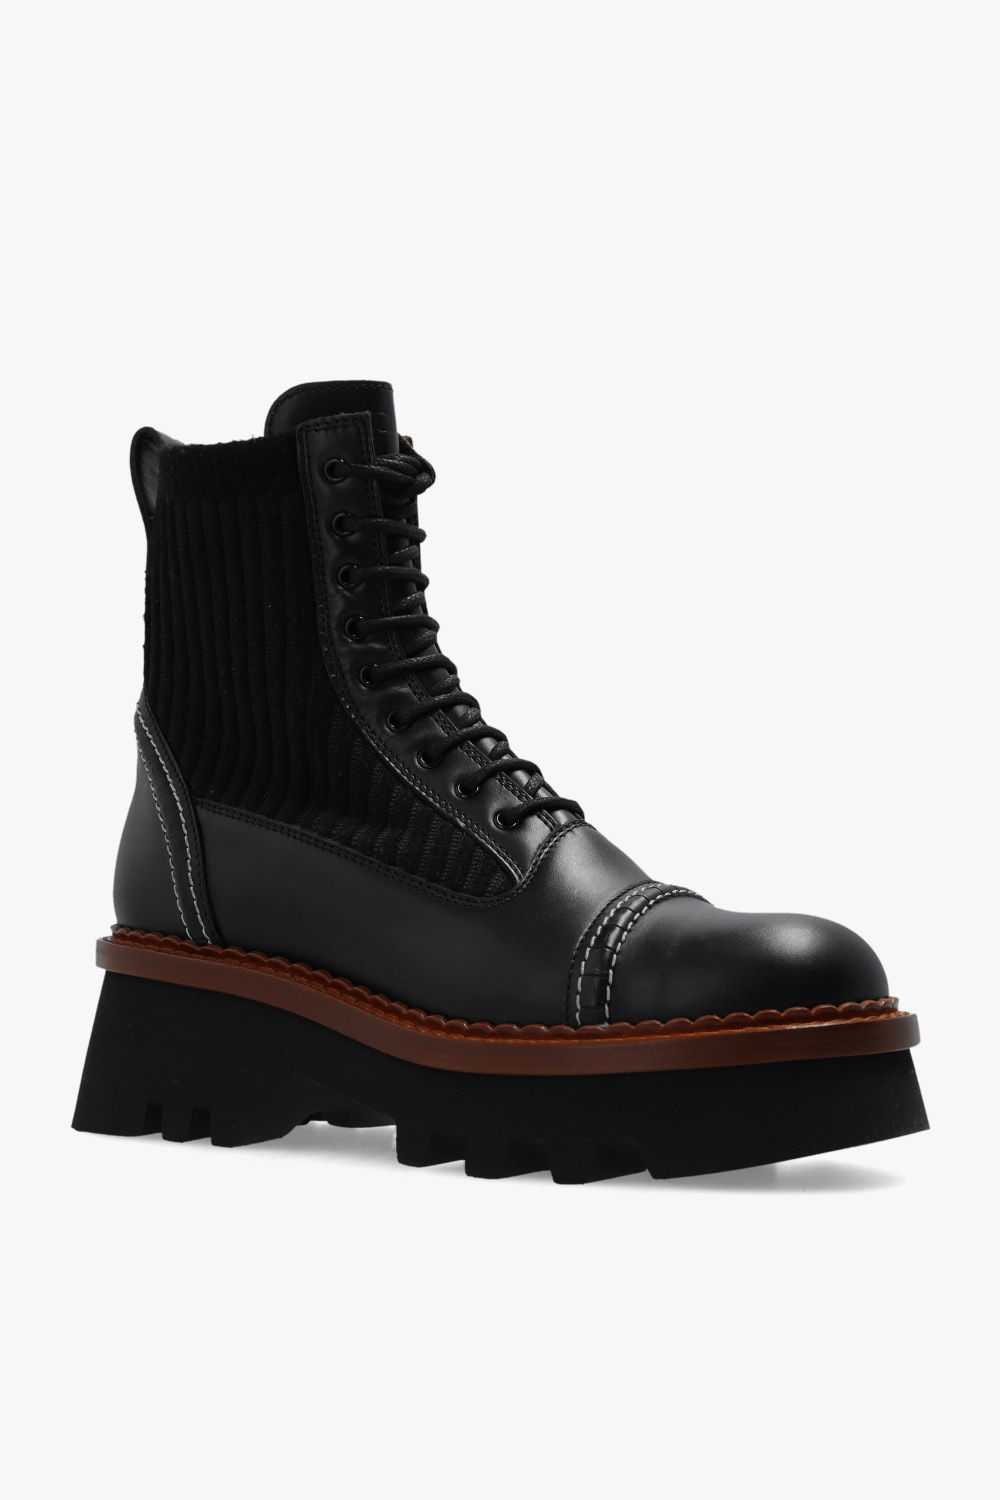 Chloé ‘Owena’ boots